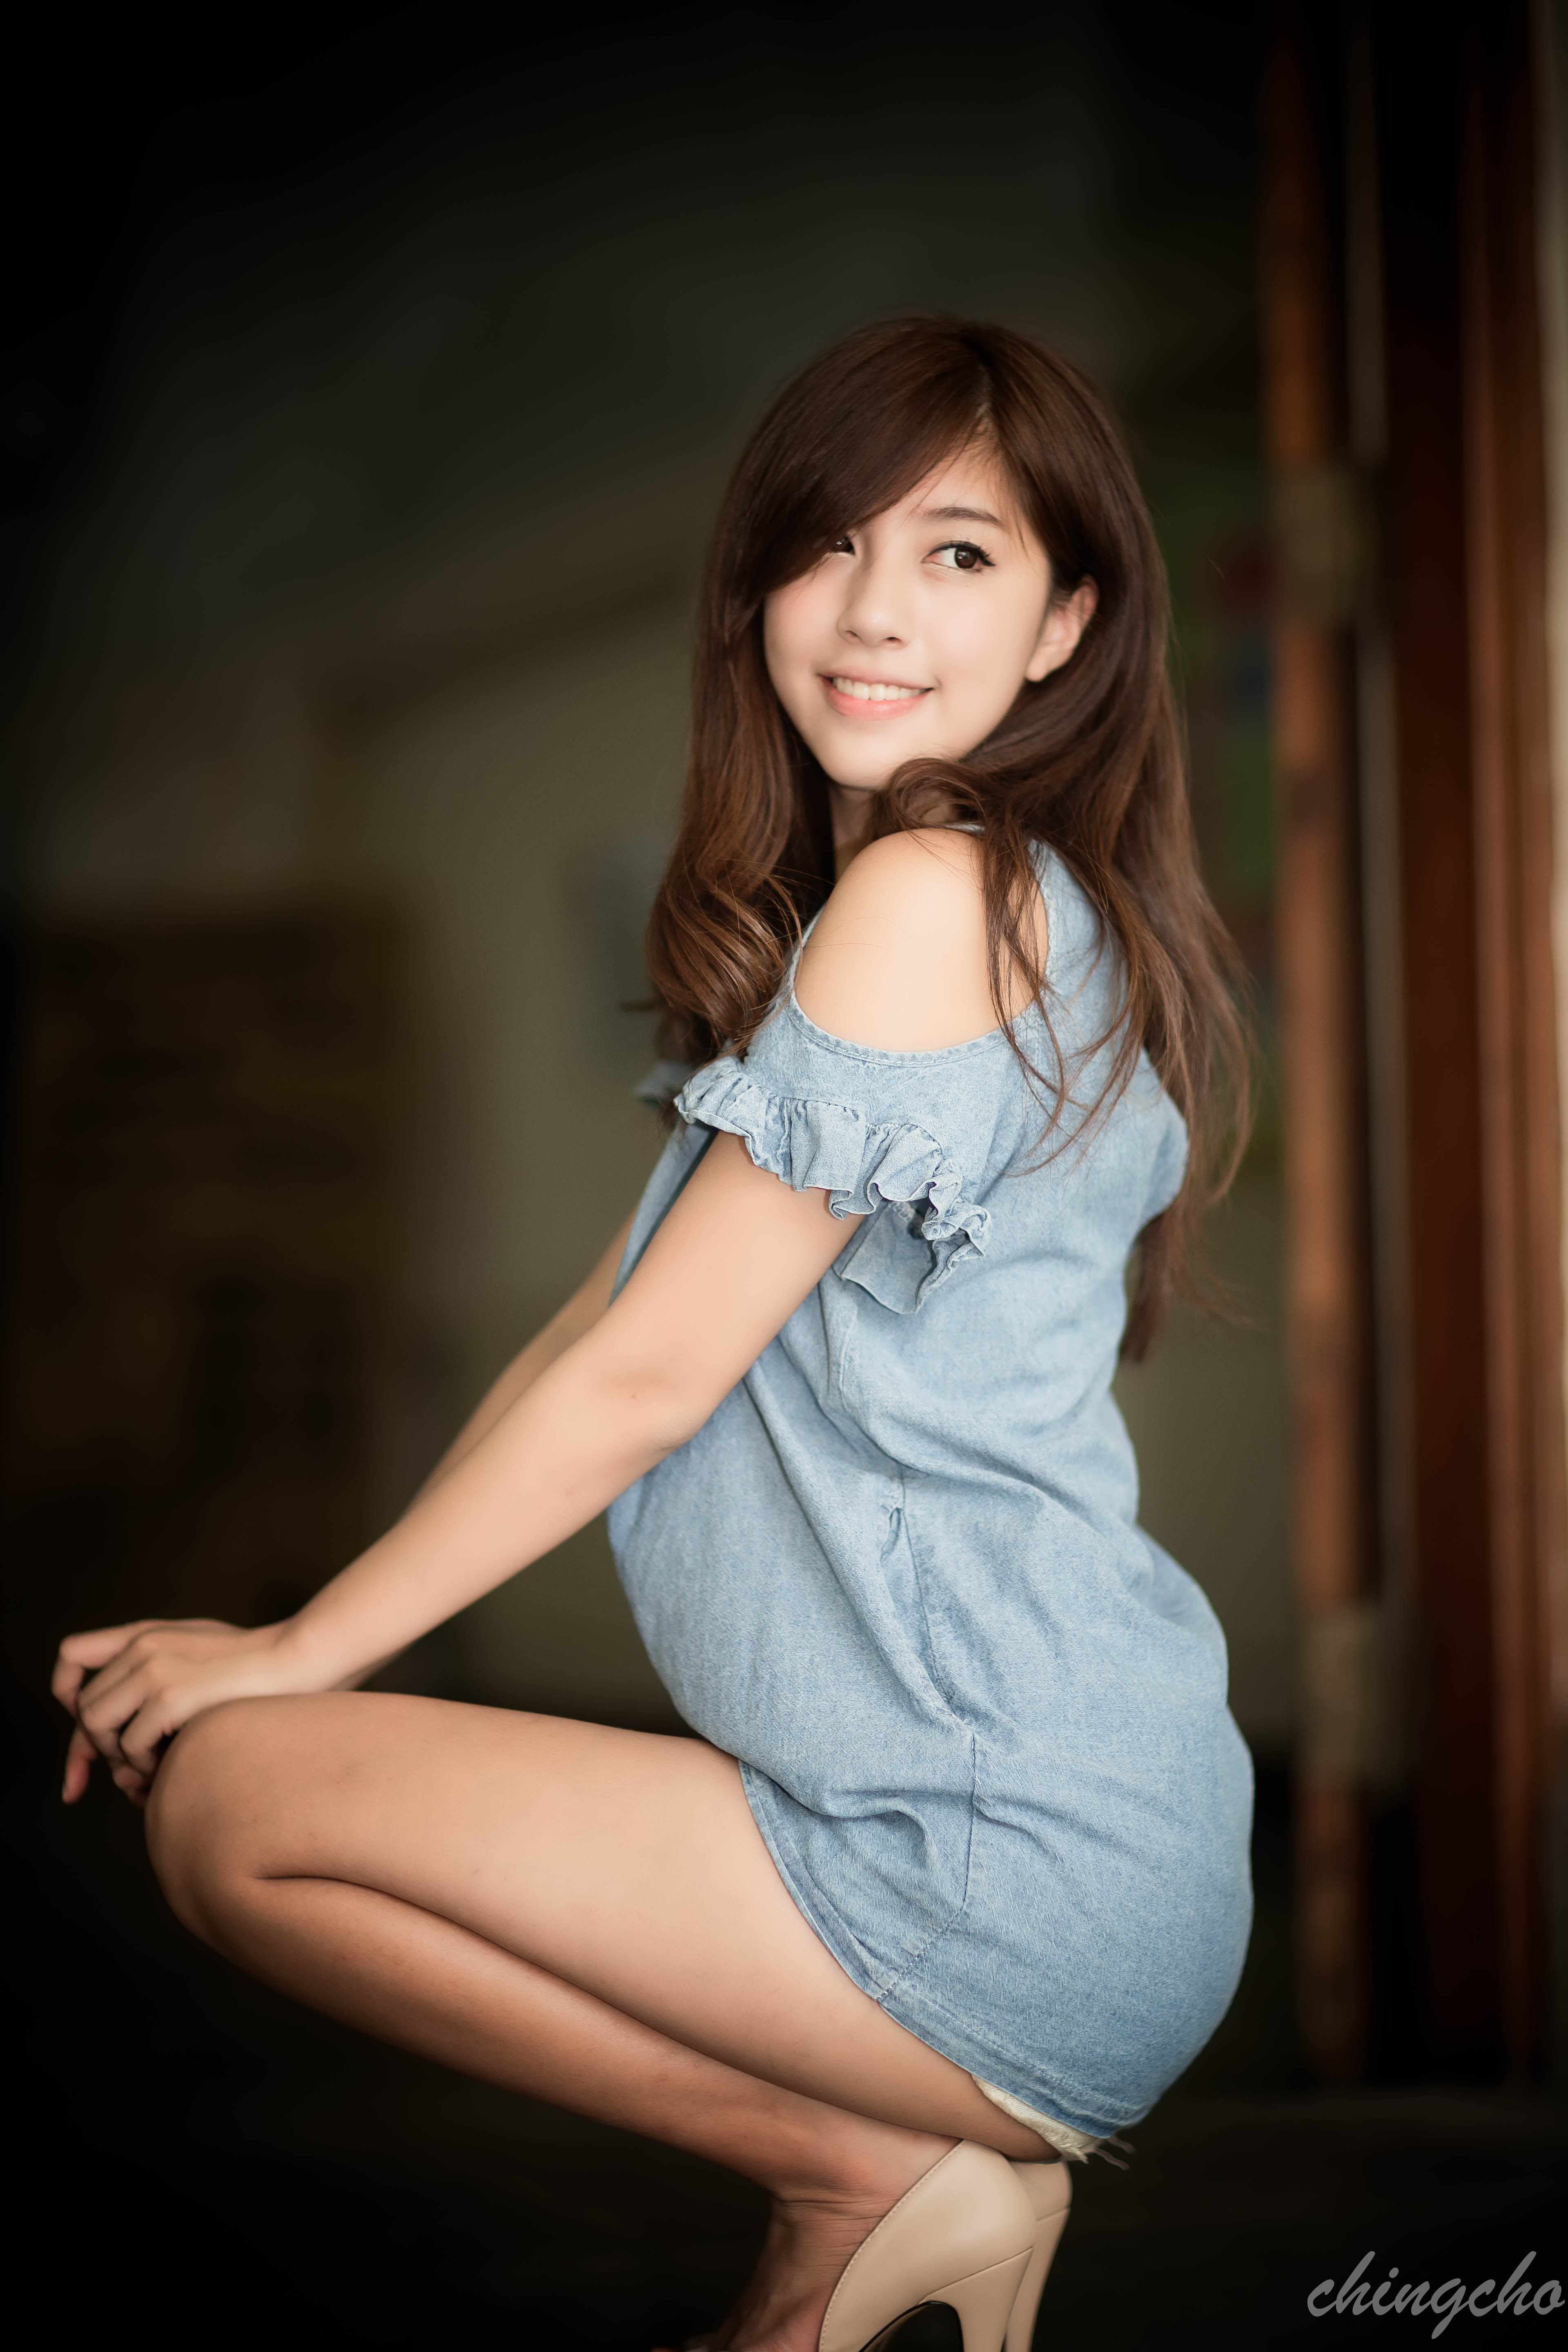 Chingcho Taiwan Taiwanese Asian Women Squatting Blue Tops Side View Brunette Hair In Face Smiling 3840x5760